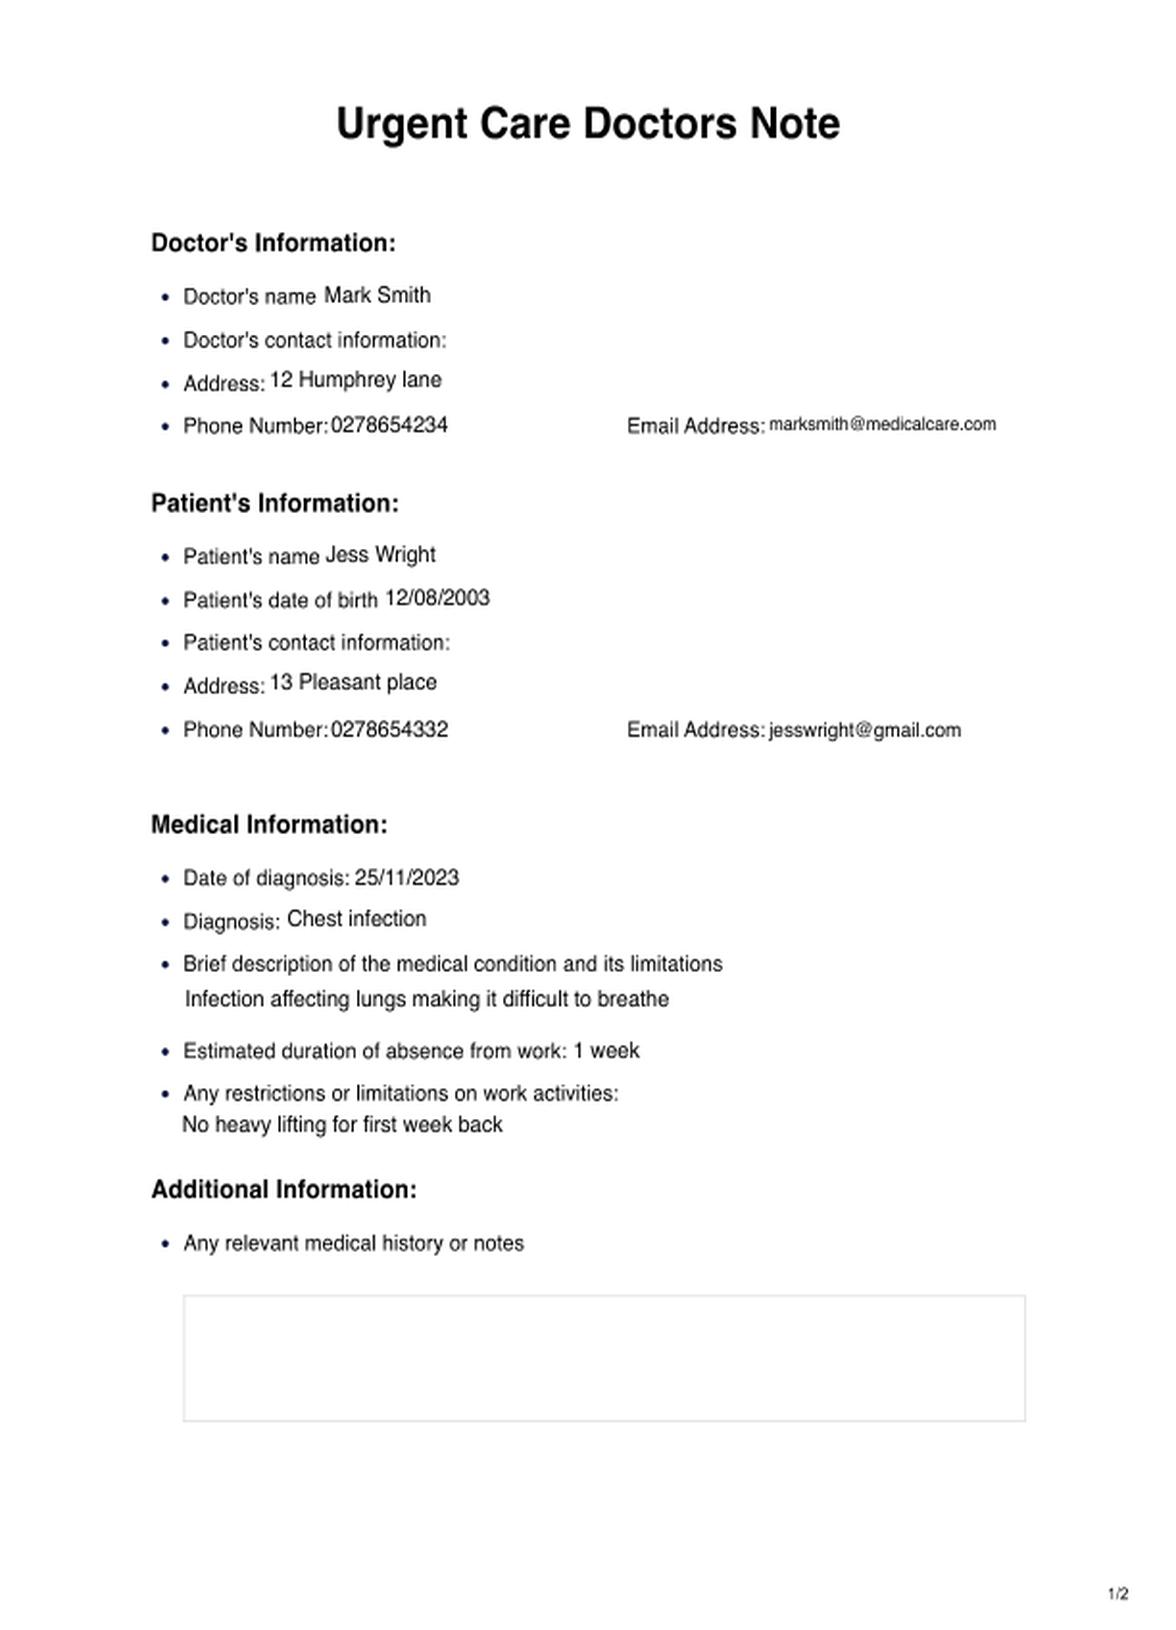 Urgent Care Doctors Note PDF Example